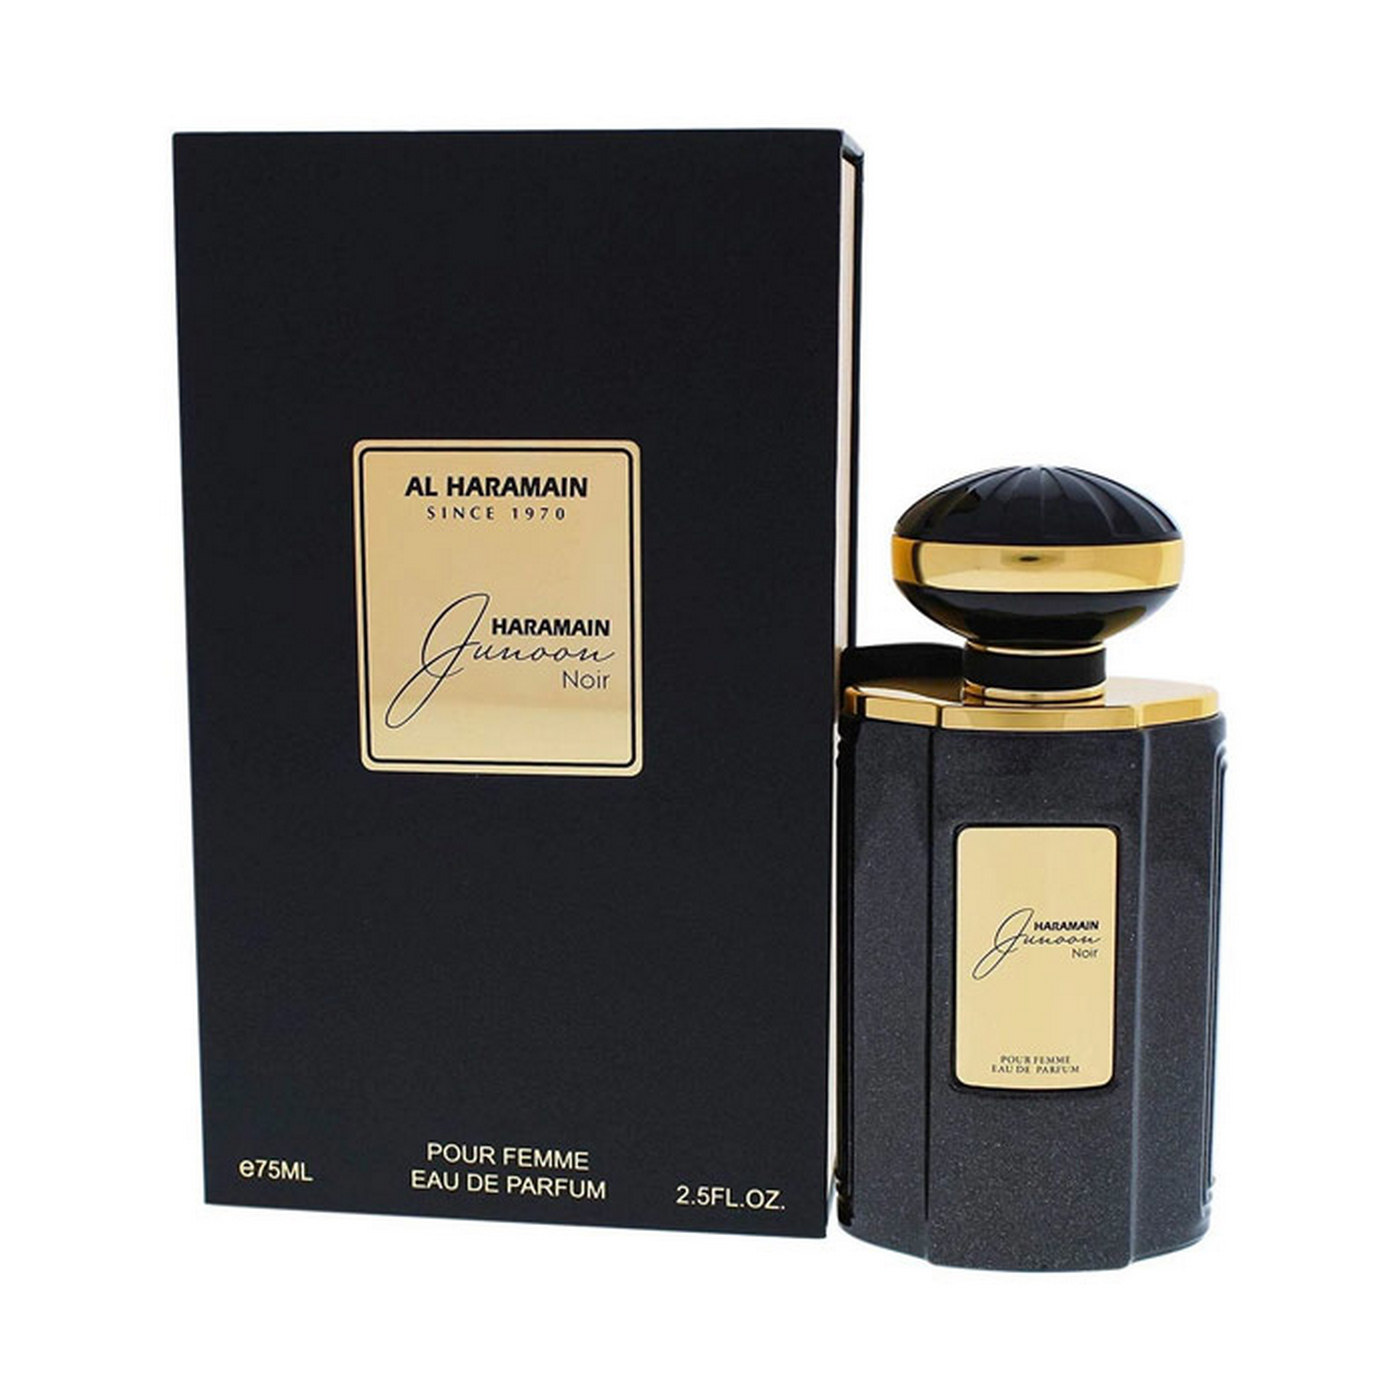 Al Haramain since 1970. Junoon Noir pour femme парфюмированная вода (EDP) 75мл. Al Haramain Junoon Noir (w) EDP 75ml Tester. Al Haramain Perfumes - Junoon oud.